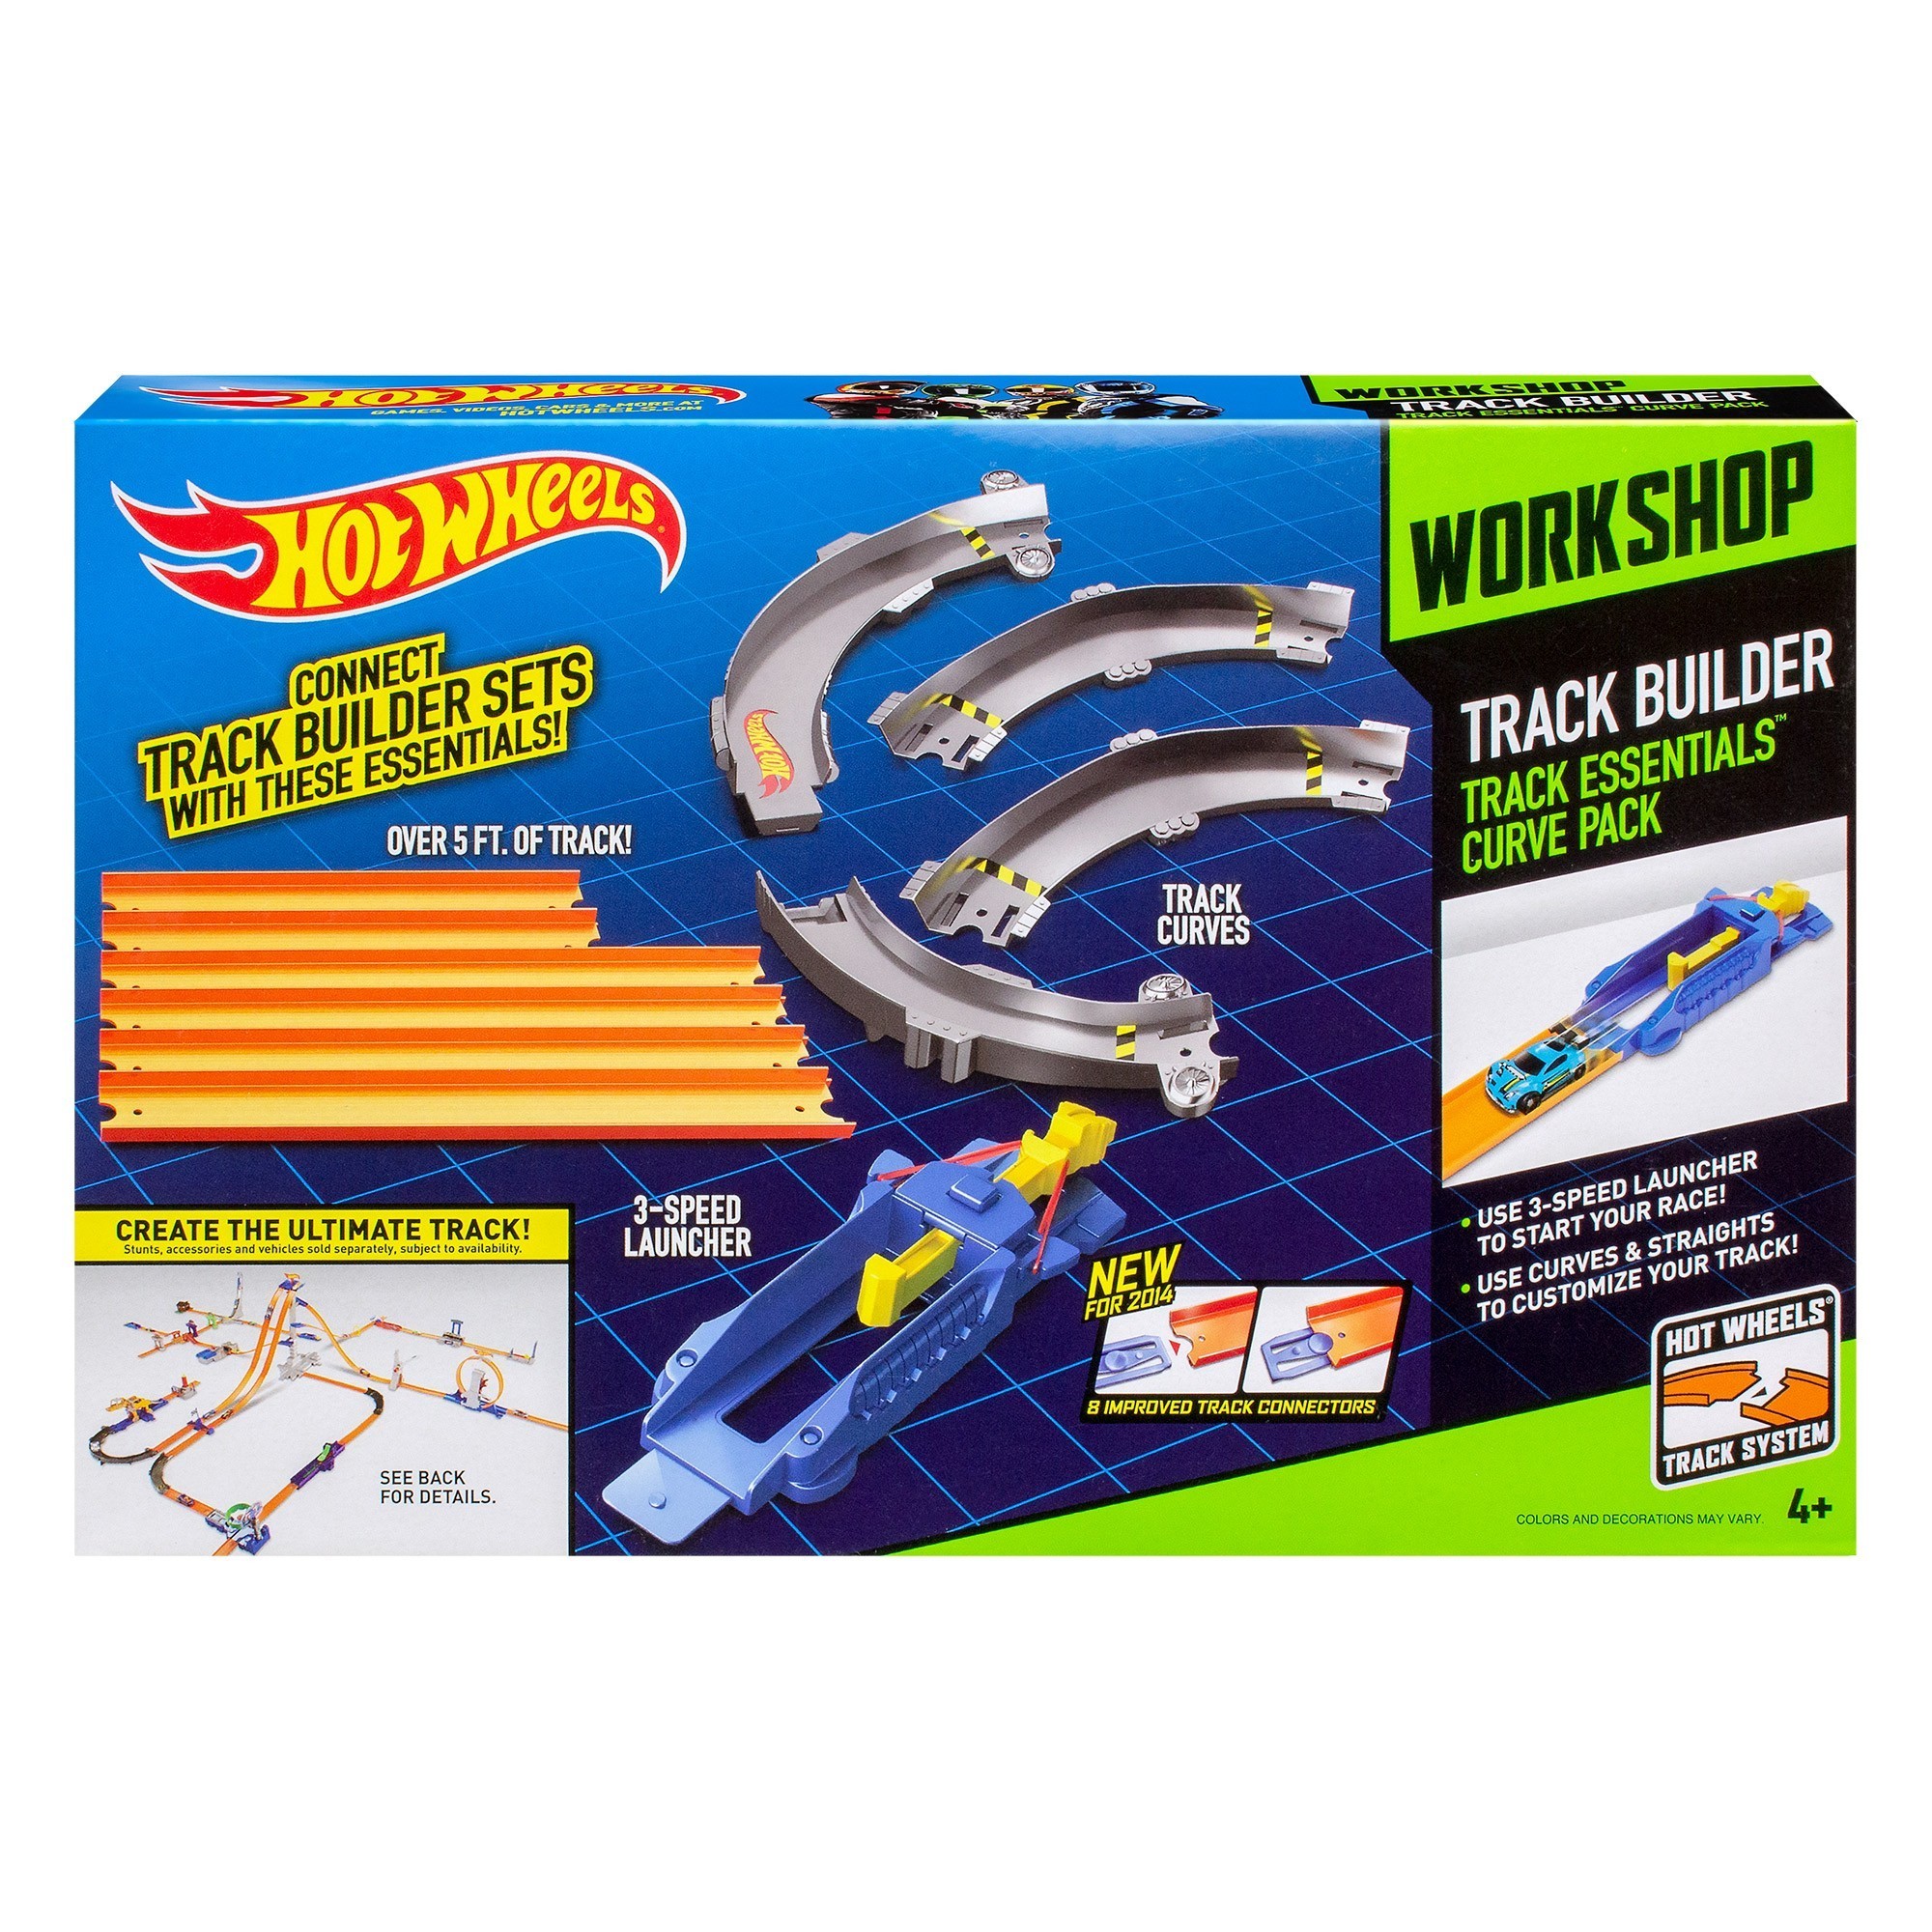 Hot Wheels - Track Builder - Track Essentials Curve Pack